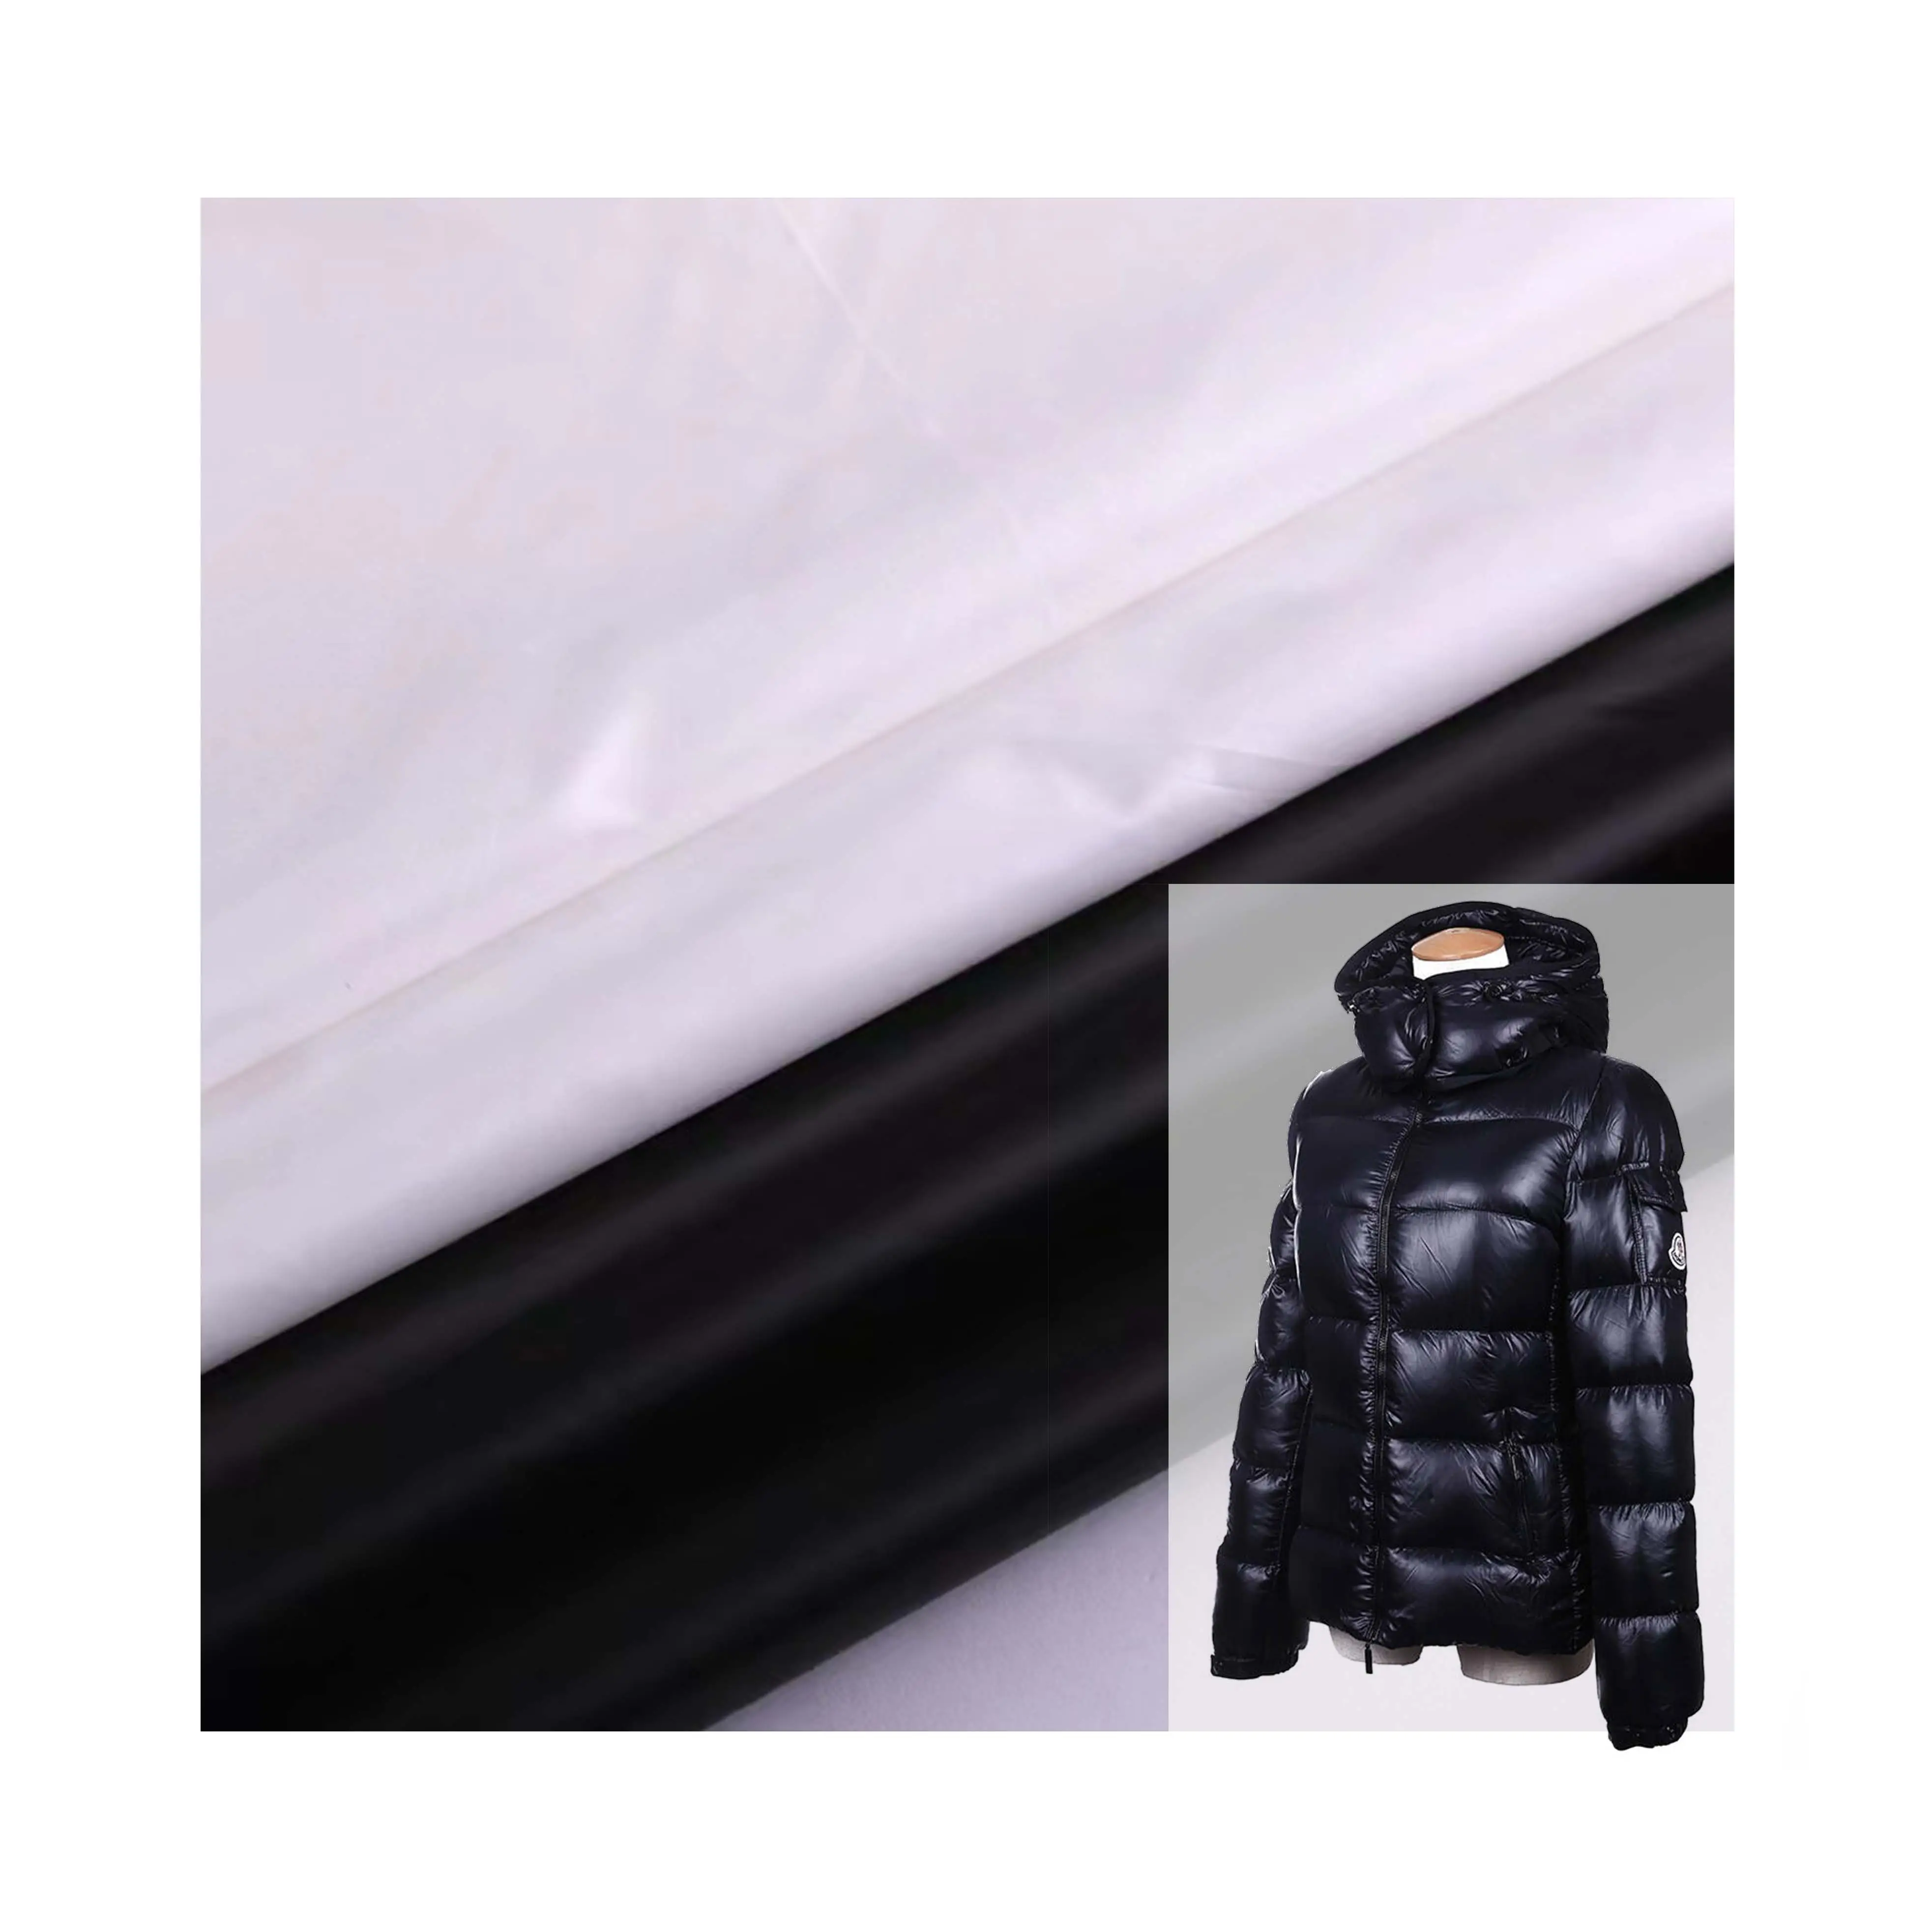 cired fabric for down jacket100% nylon taffeta waterproof 20D super thin fiber windproof high density fabric